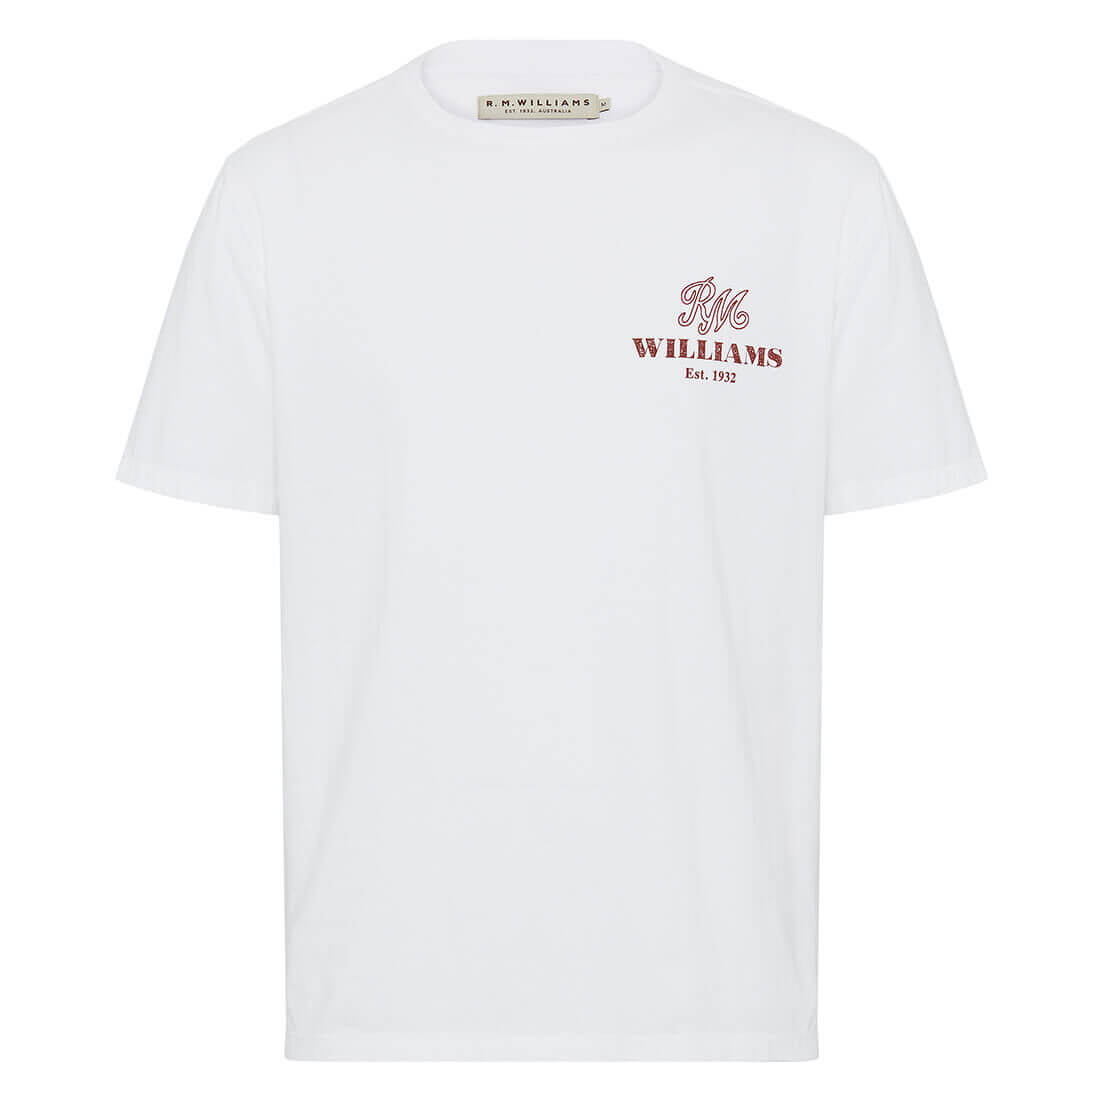 RM Williams Shirt Sale, Same Day Dispatch